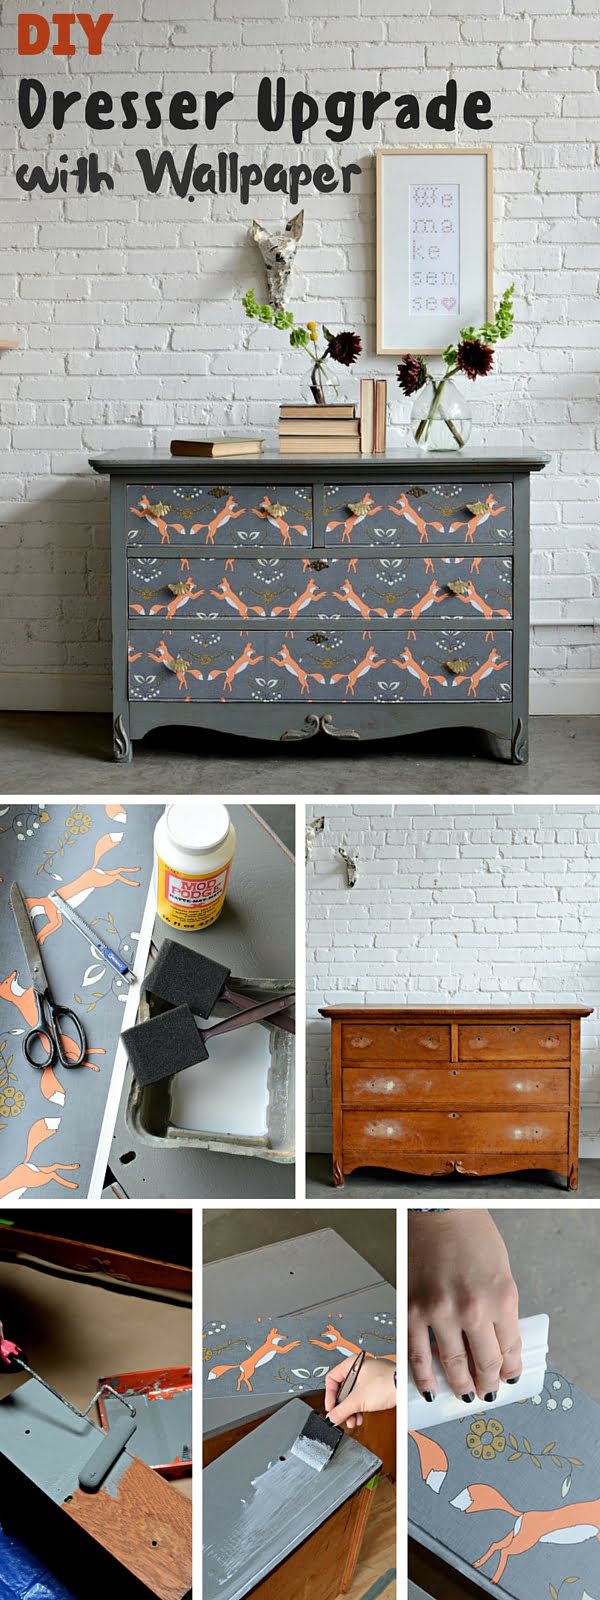  Dresser Upgrade with Wallpaper  